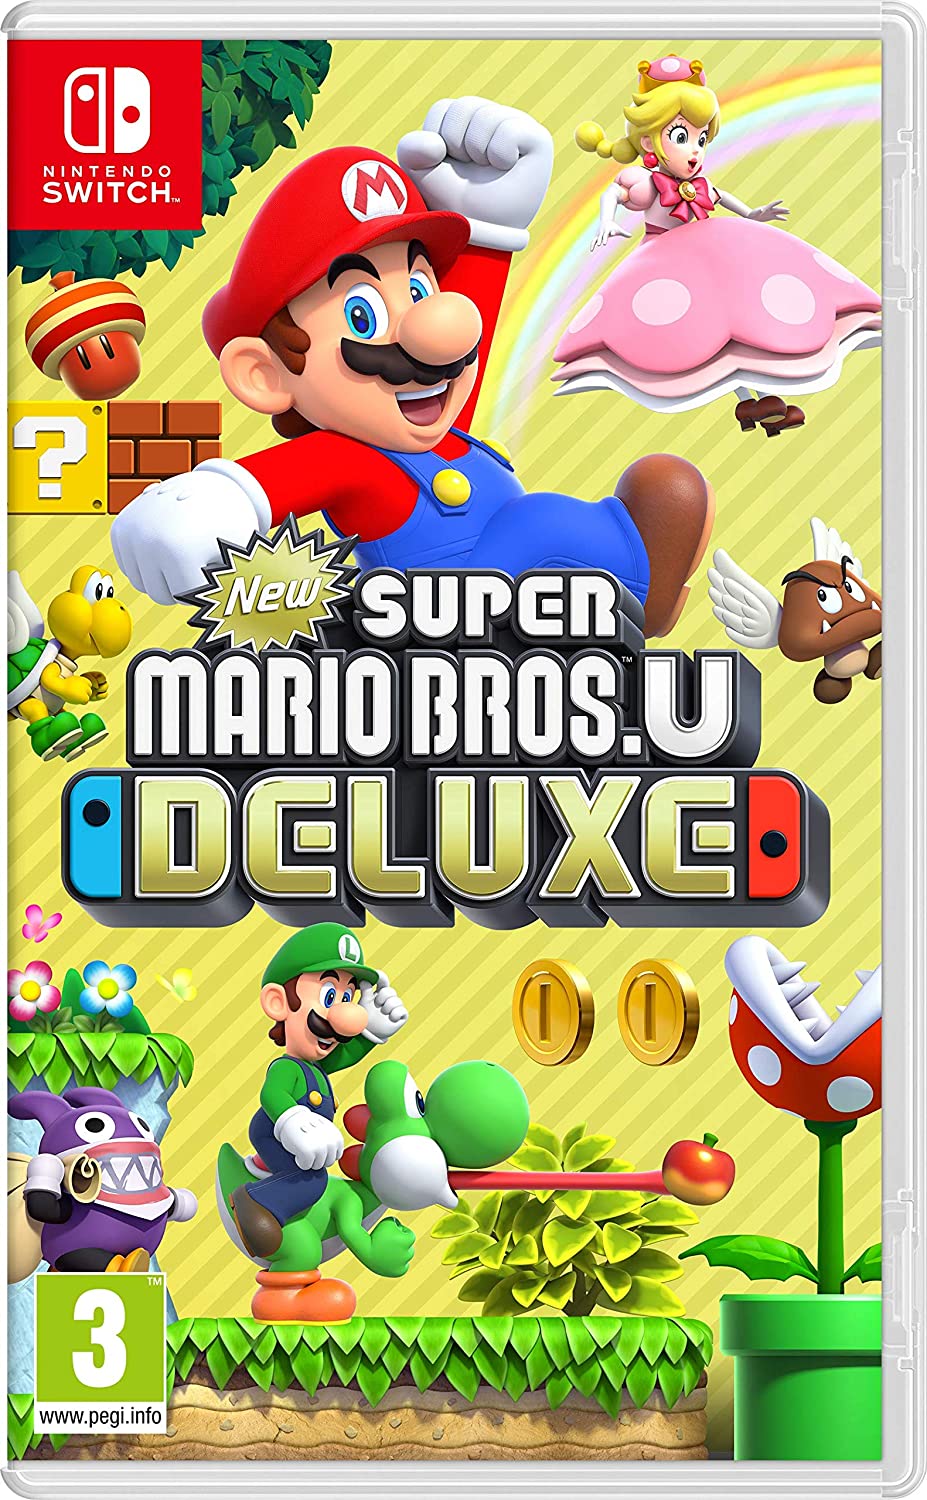 Couverture de Super Mario Bros. U Deluxe pour Nintendo Switch.